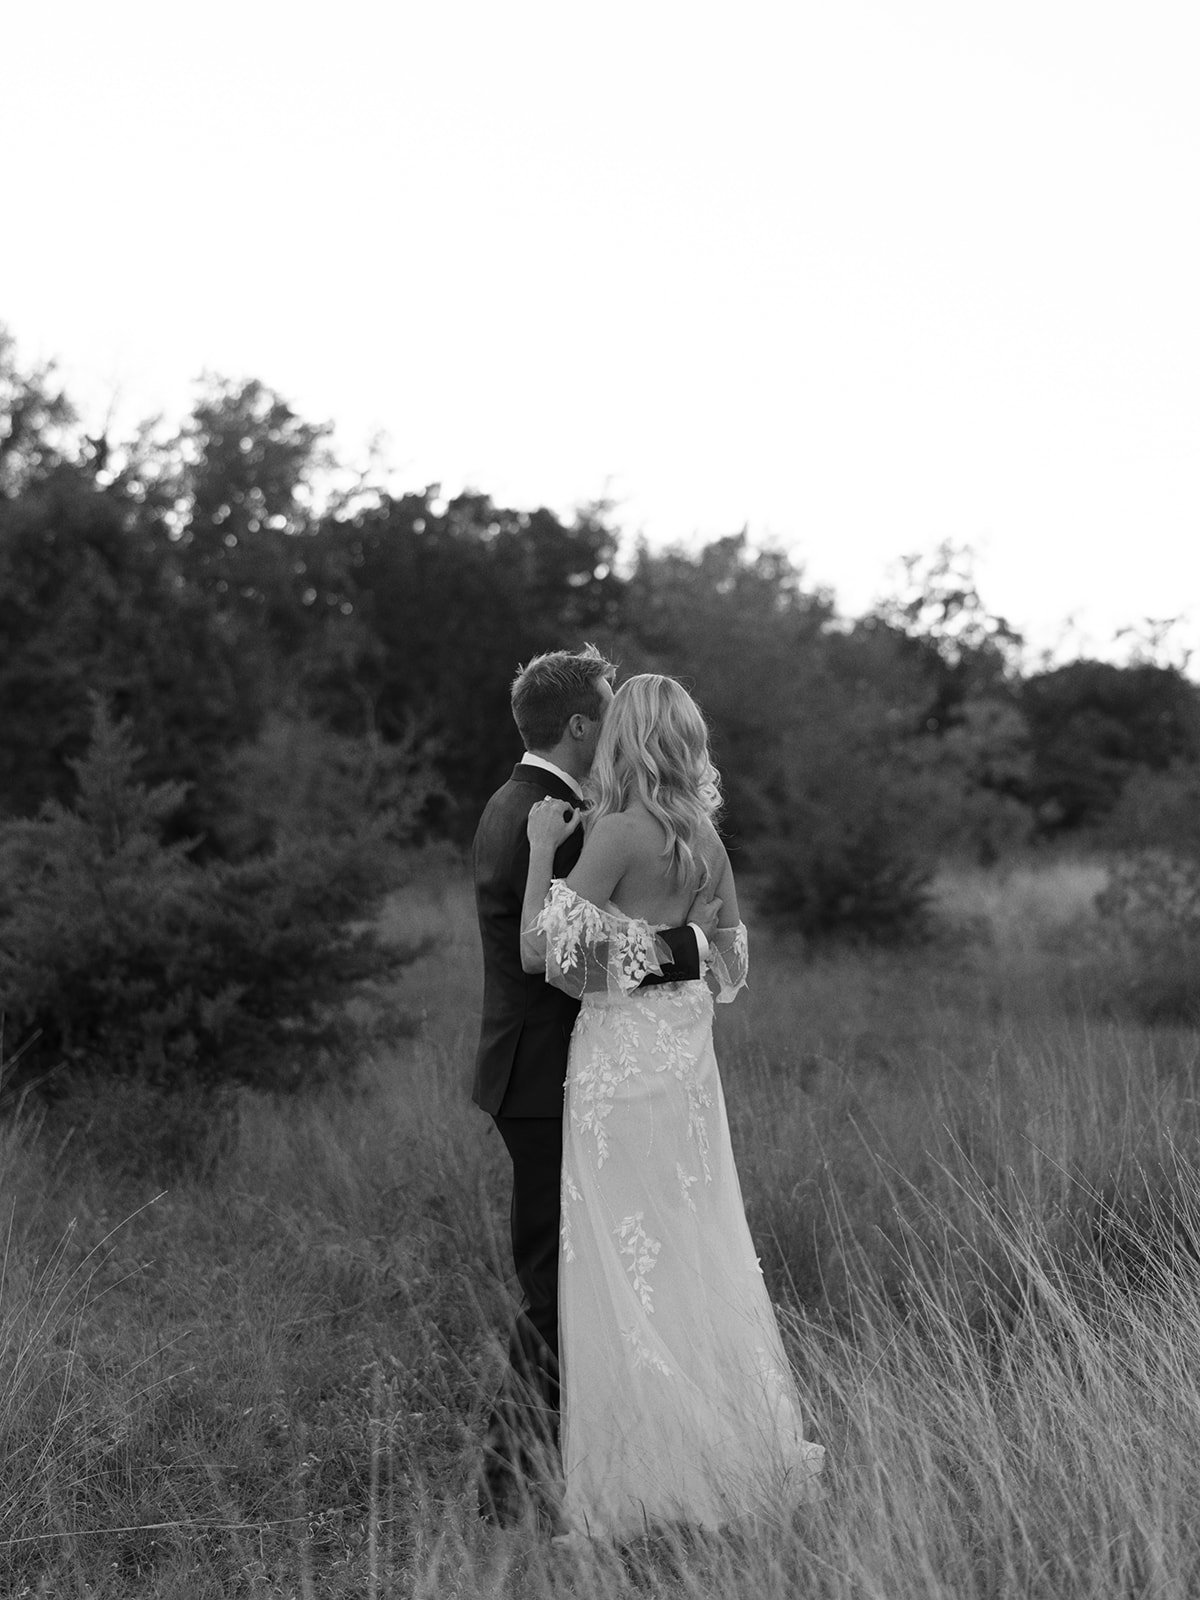 Best-Austin-Wedding-Photographers-Elopement-Film-35mm-Asheville-Santa-Barbara-Backyard-128.jpg